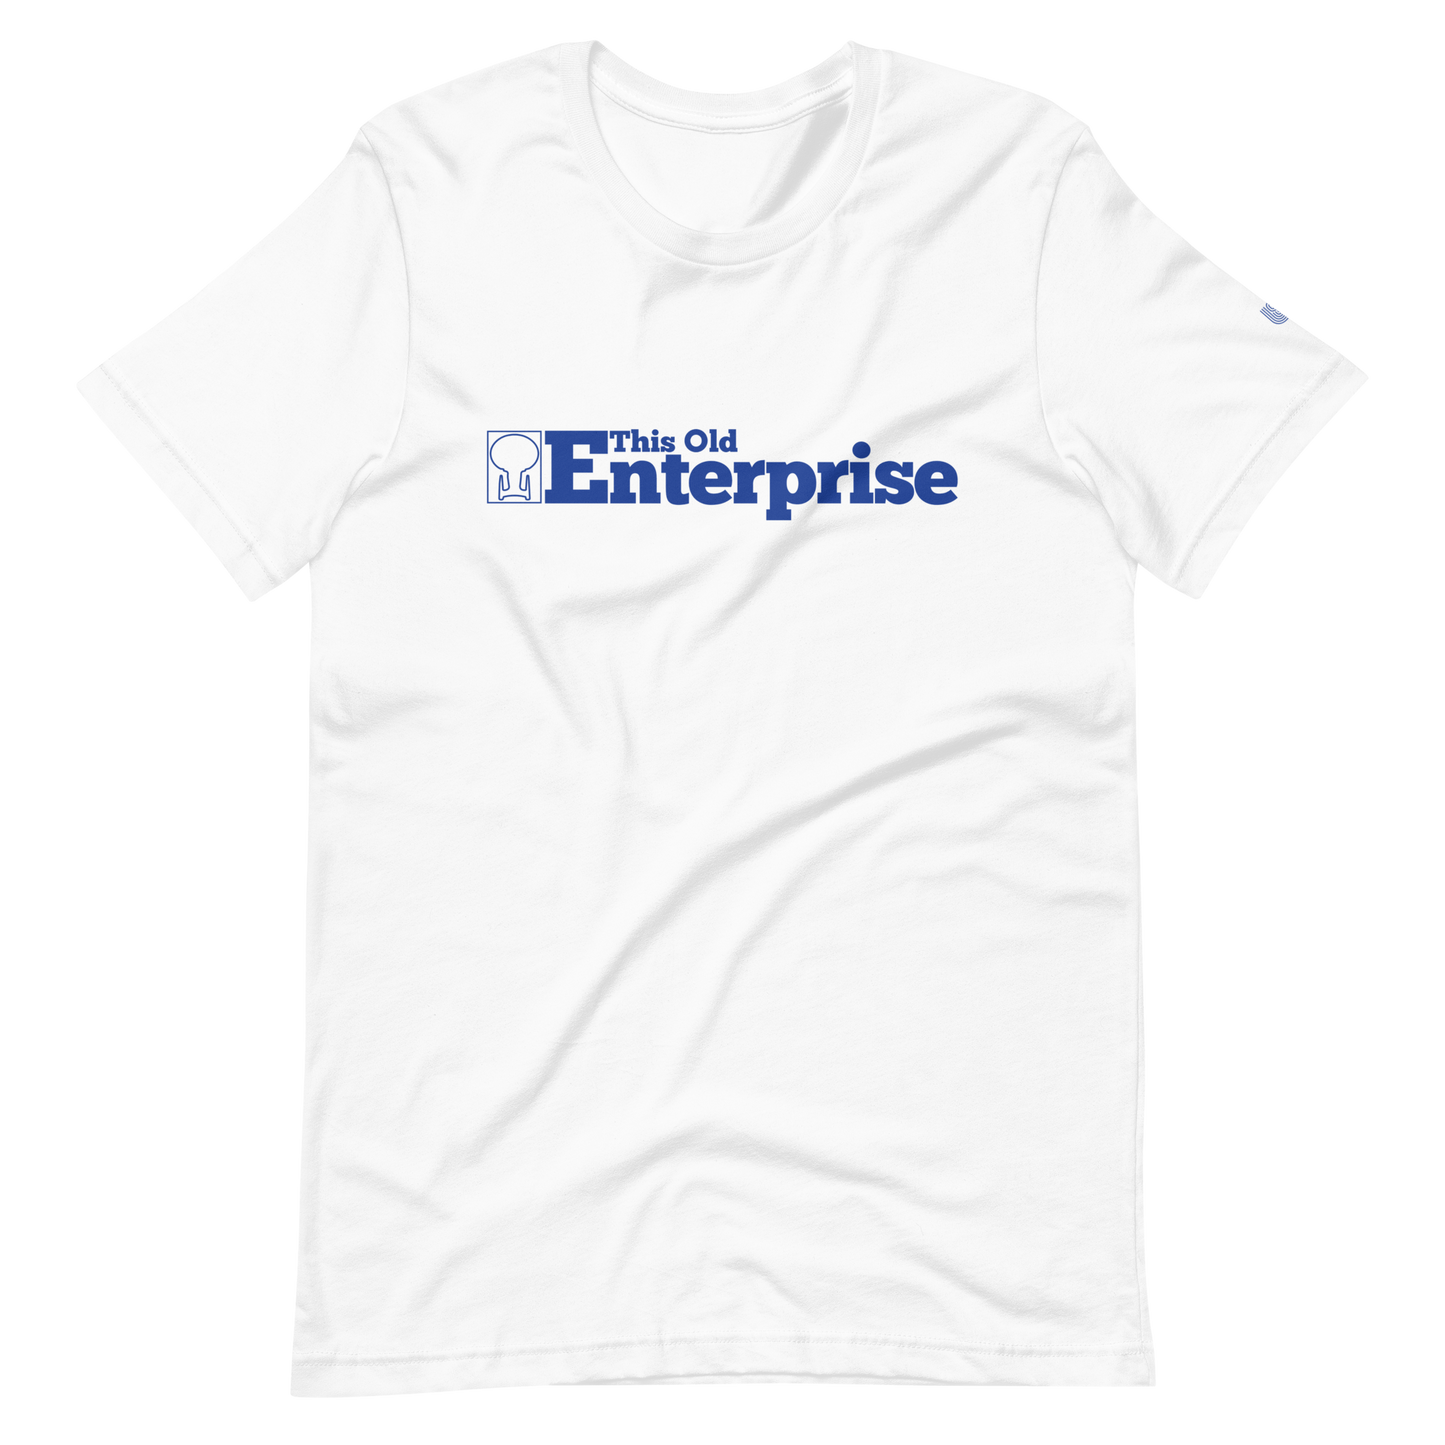 This Old Enterprise T-Shirt